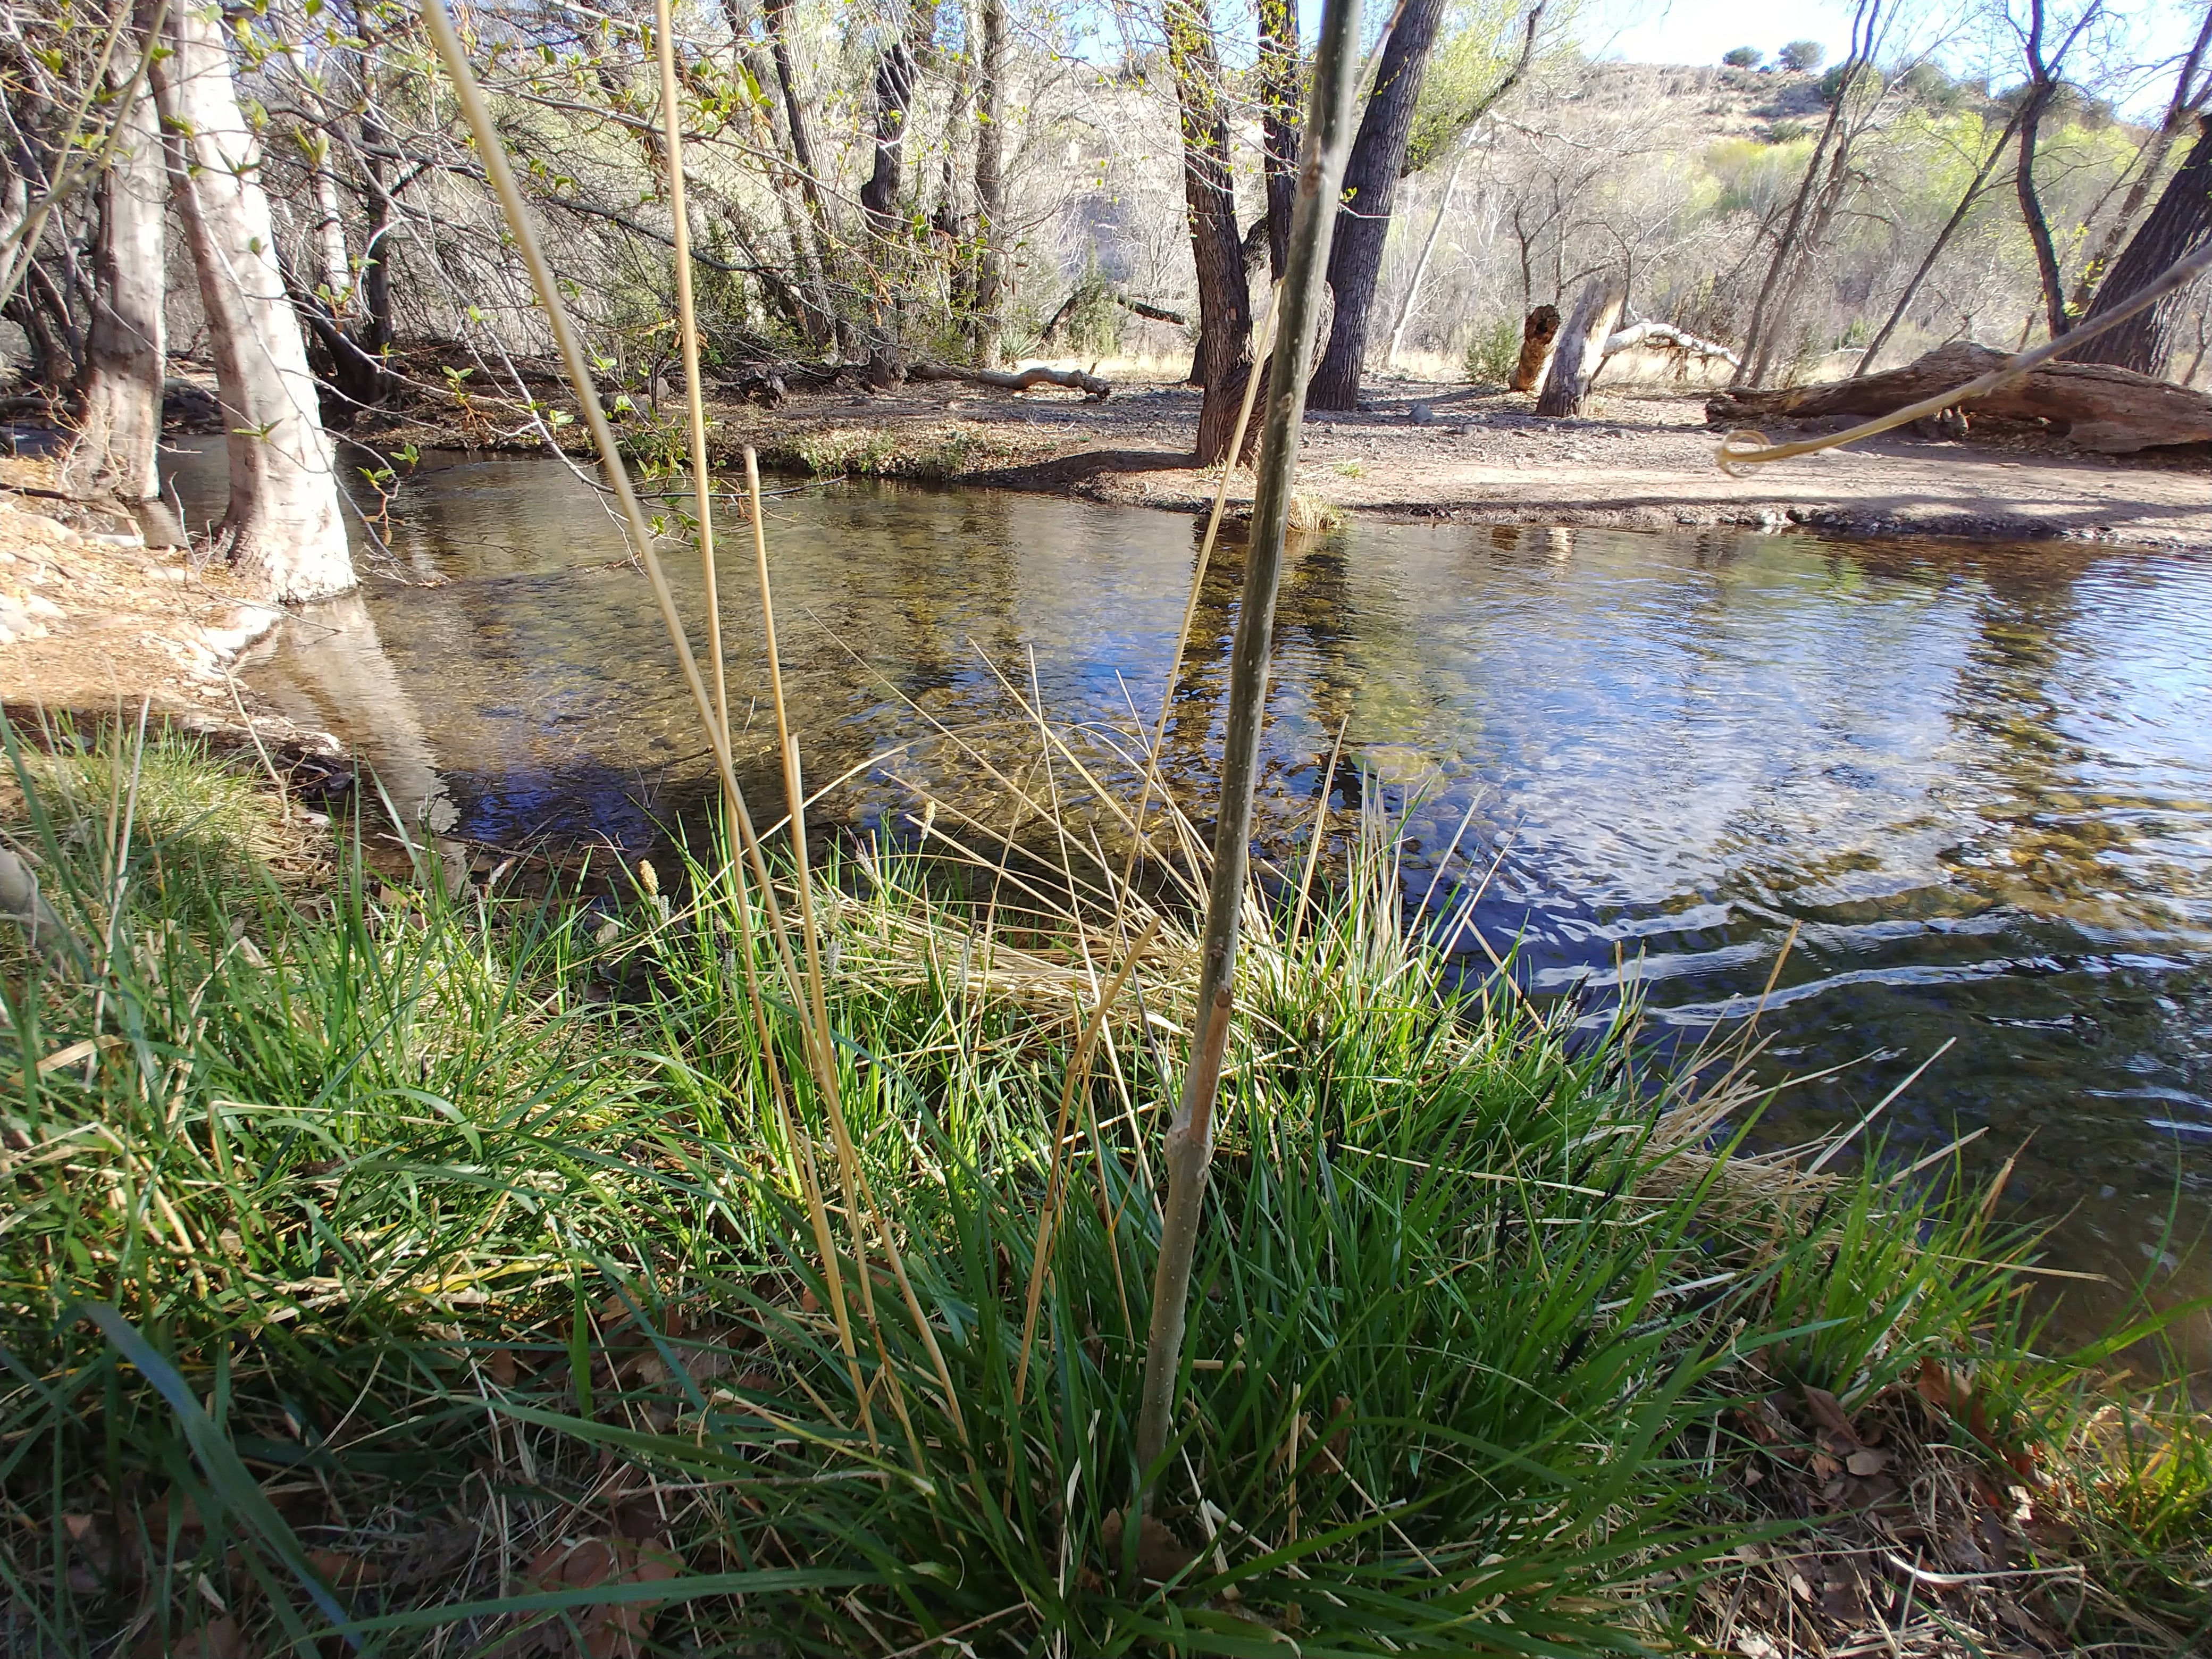 A peek at the creek